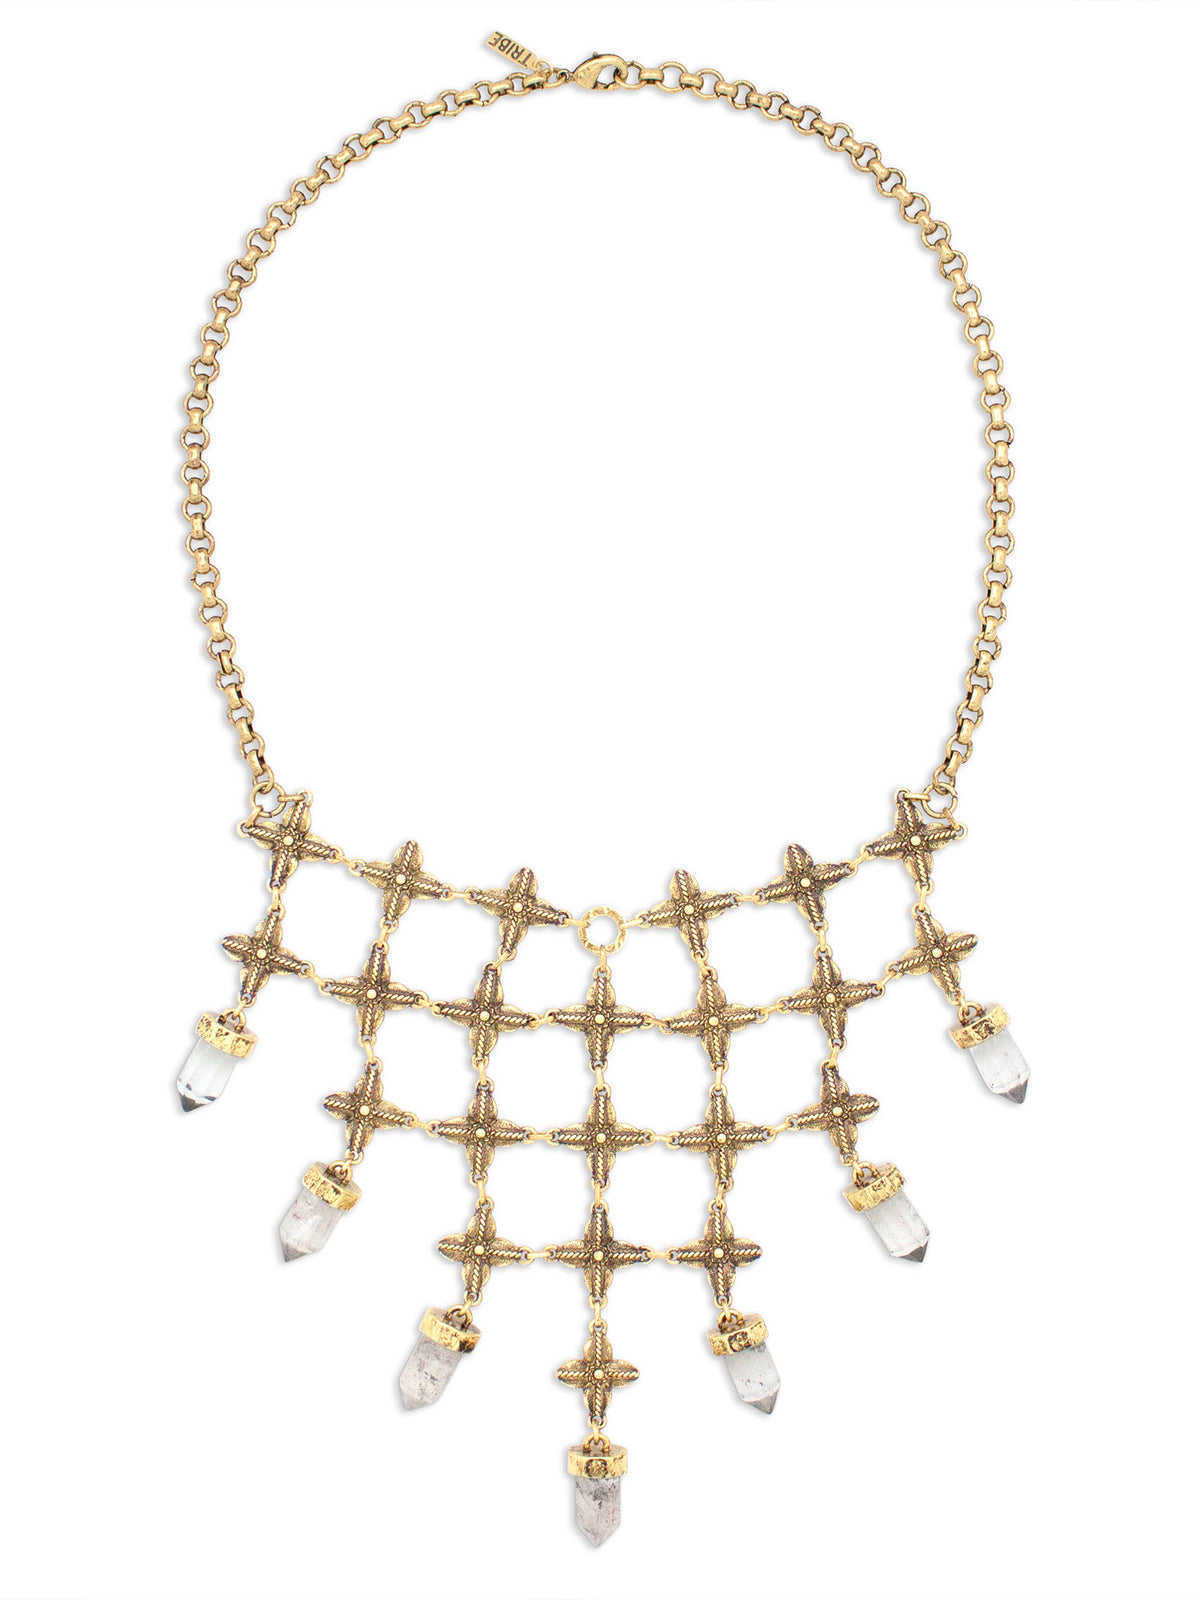 Hiouchi Shine On Crystal Bib Necklace | Antique Finish Gold